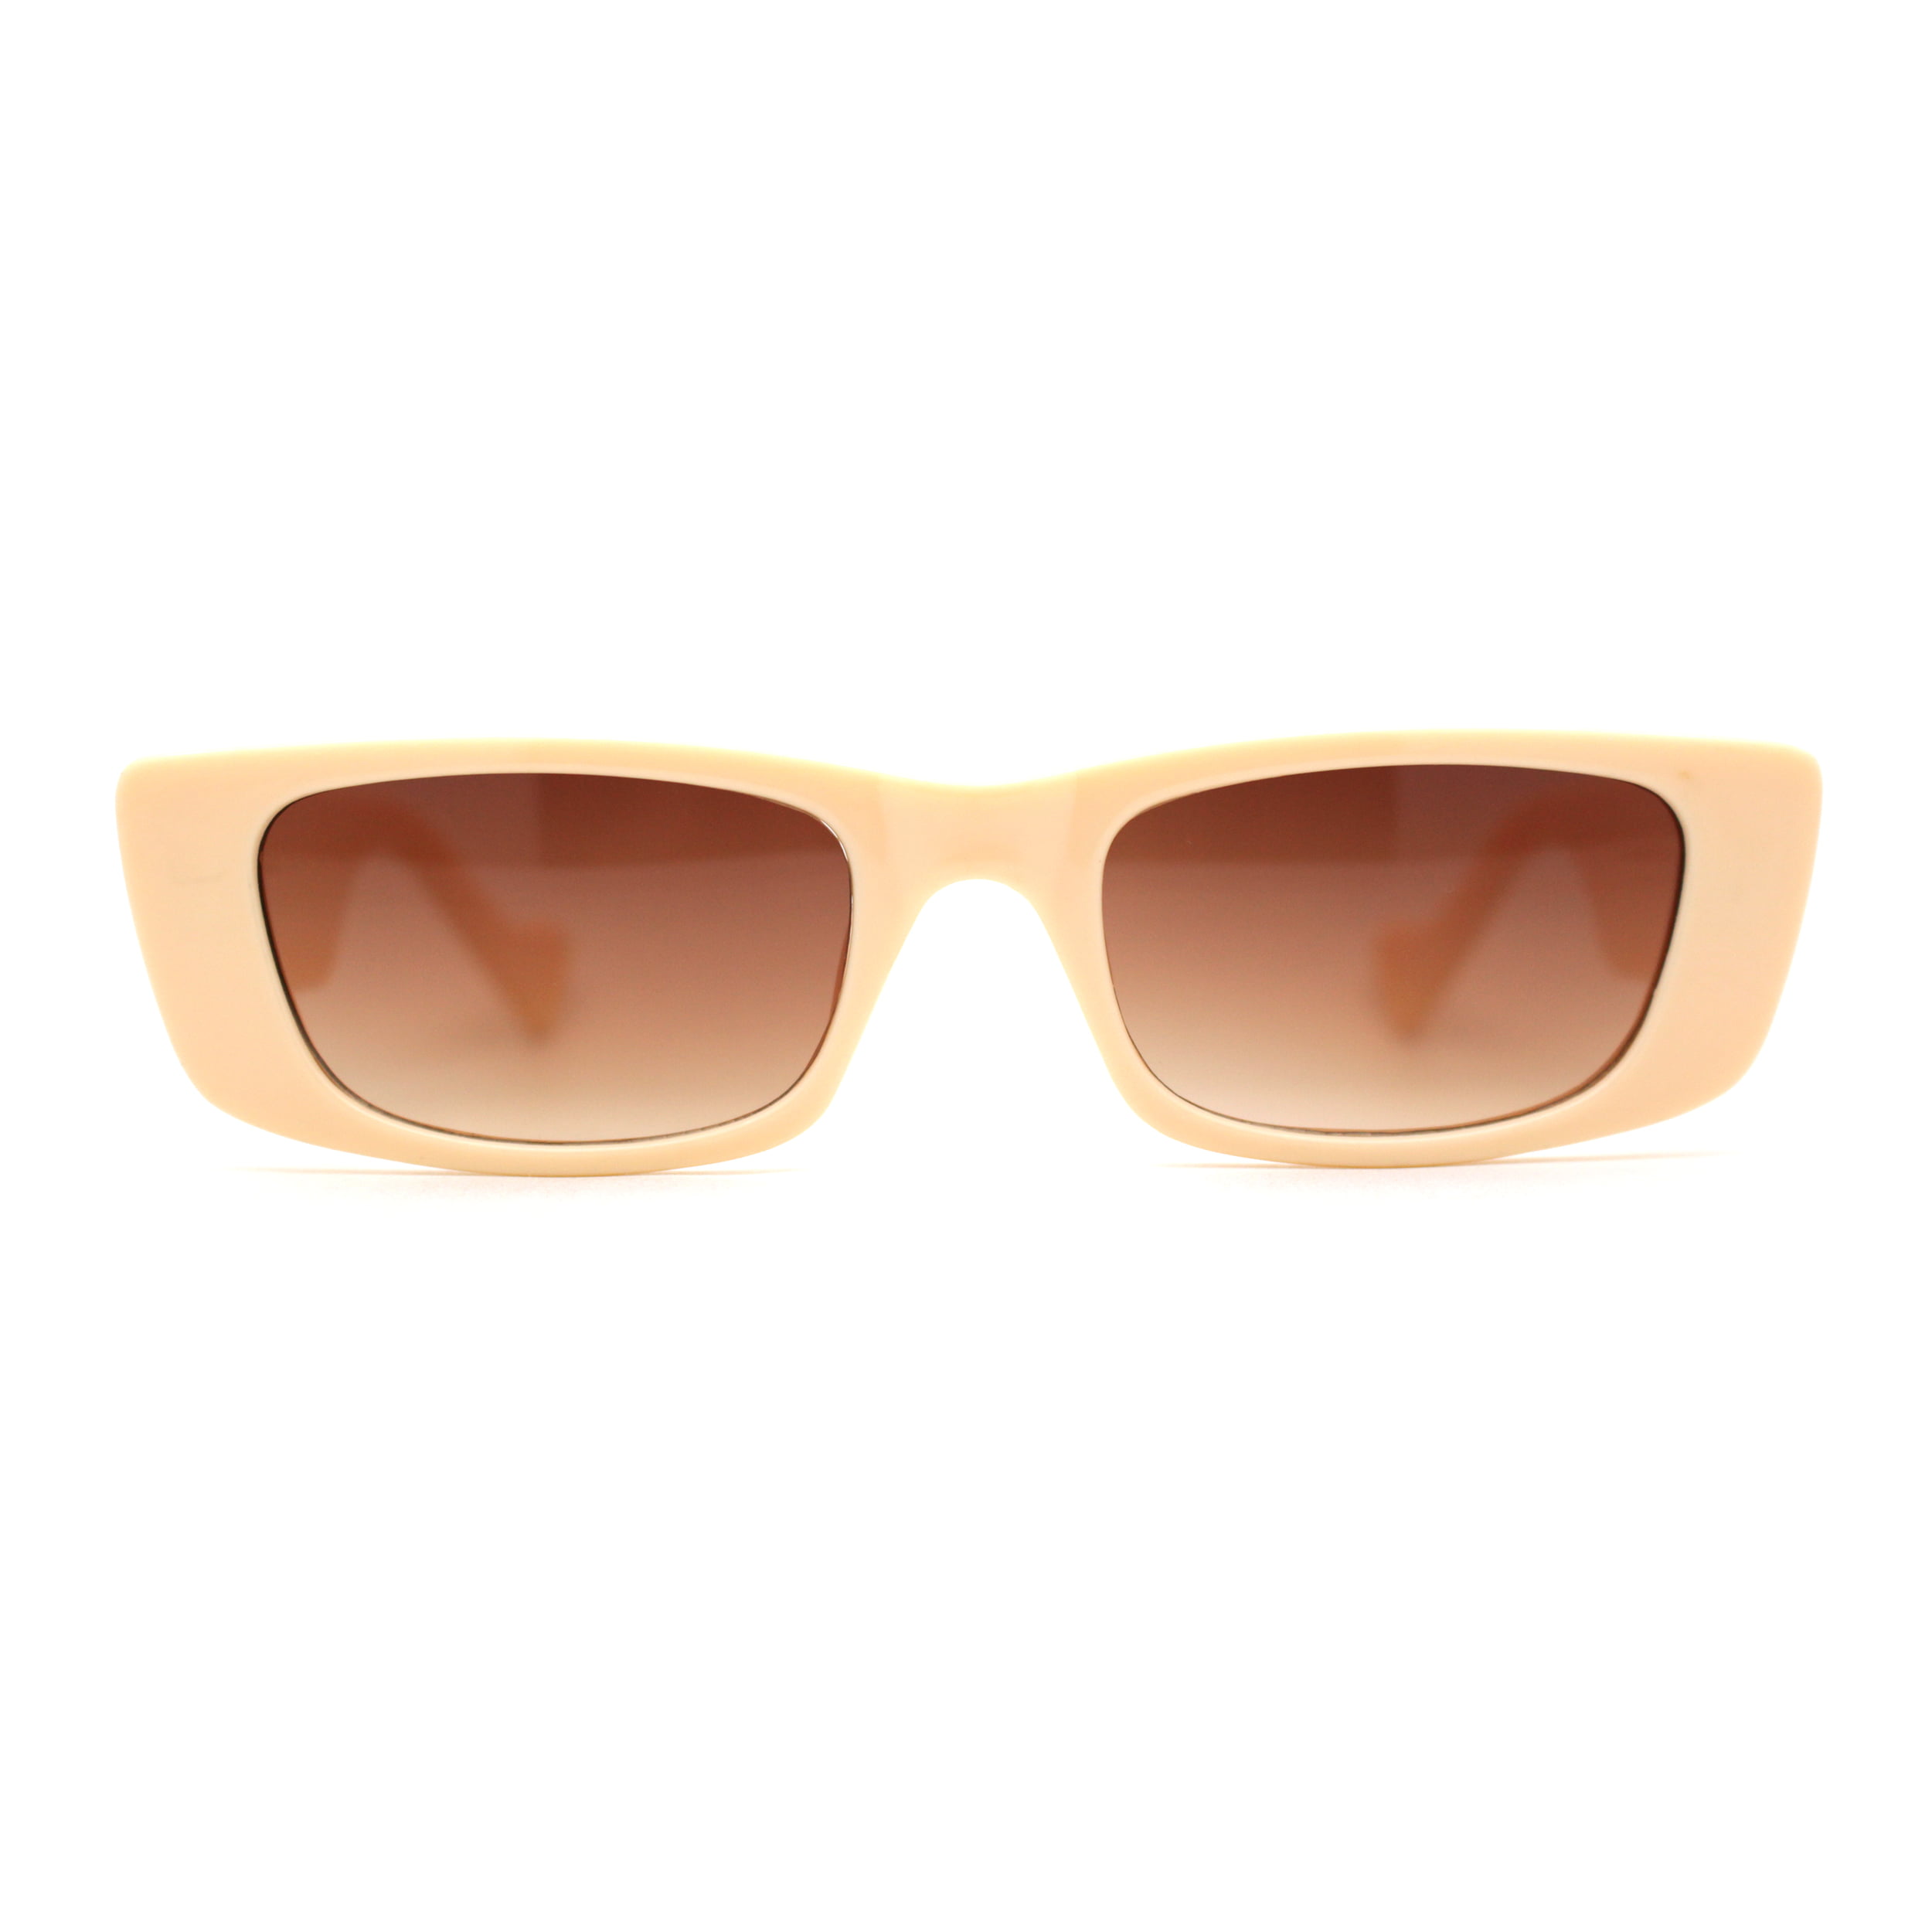 Sa106 Womens Retro Mod Classic Angular Rectangle Sunglasses Ivory Brown